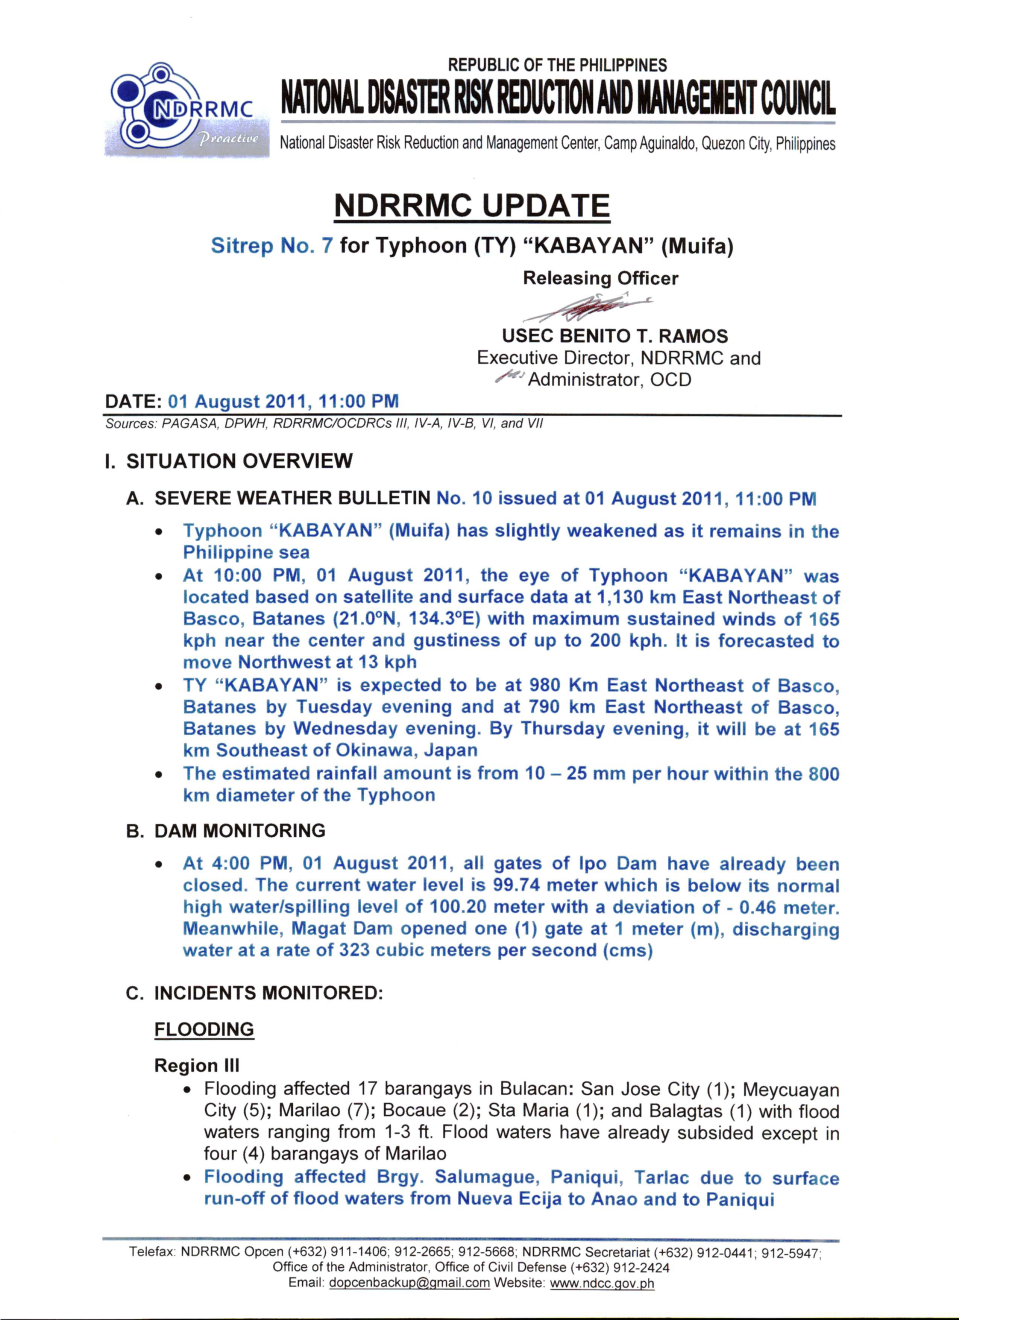 NDRRMC Update Sitrep No. 7 for Typhoon KABAYAN (Muifa)